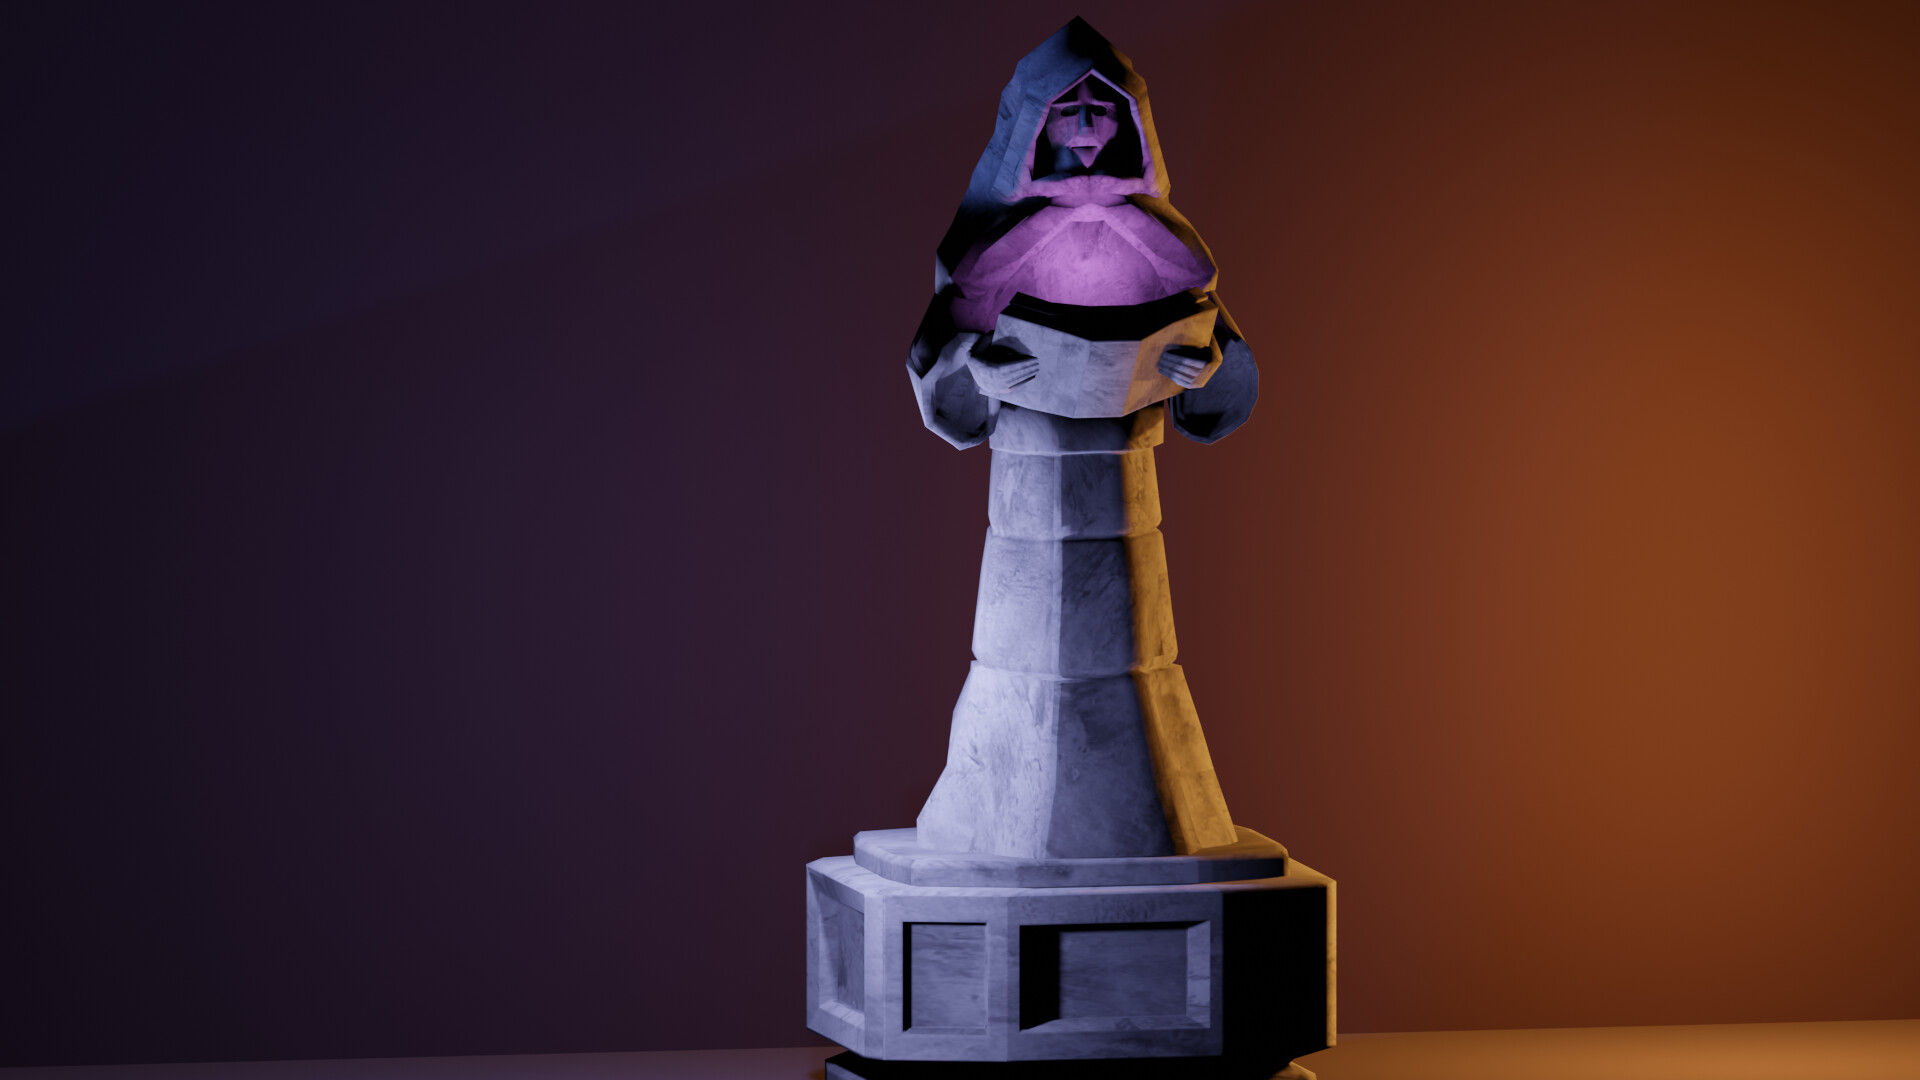 ArtStation - Statue of Wizard - Roblox game